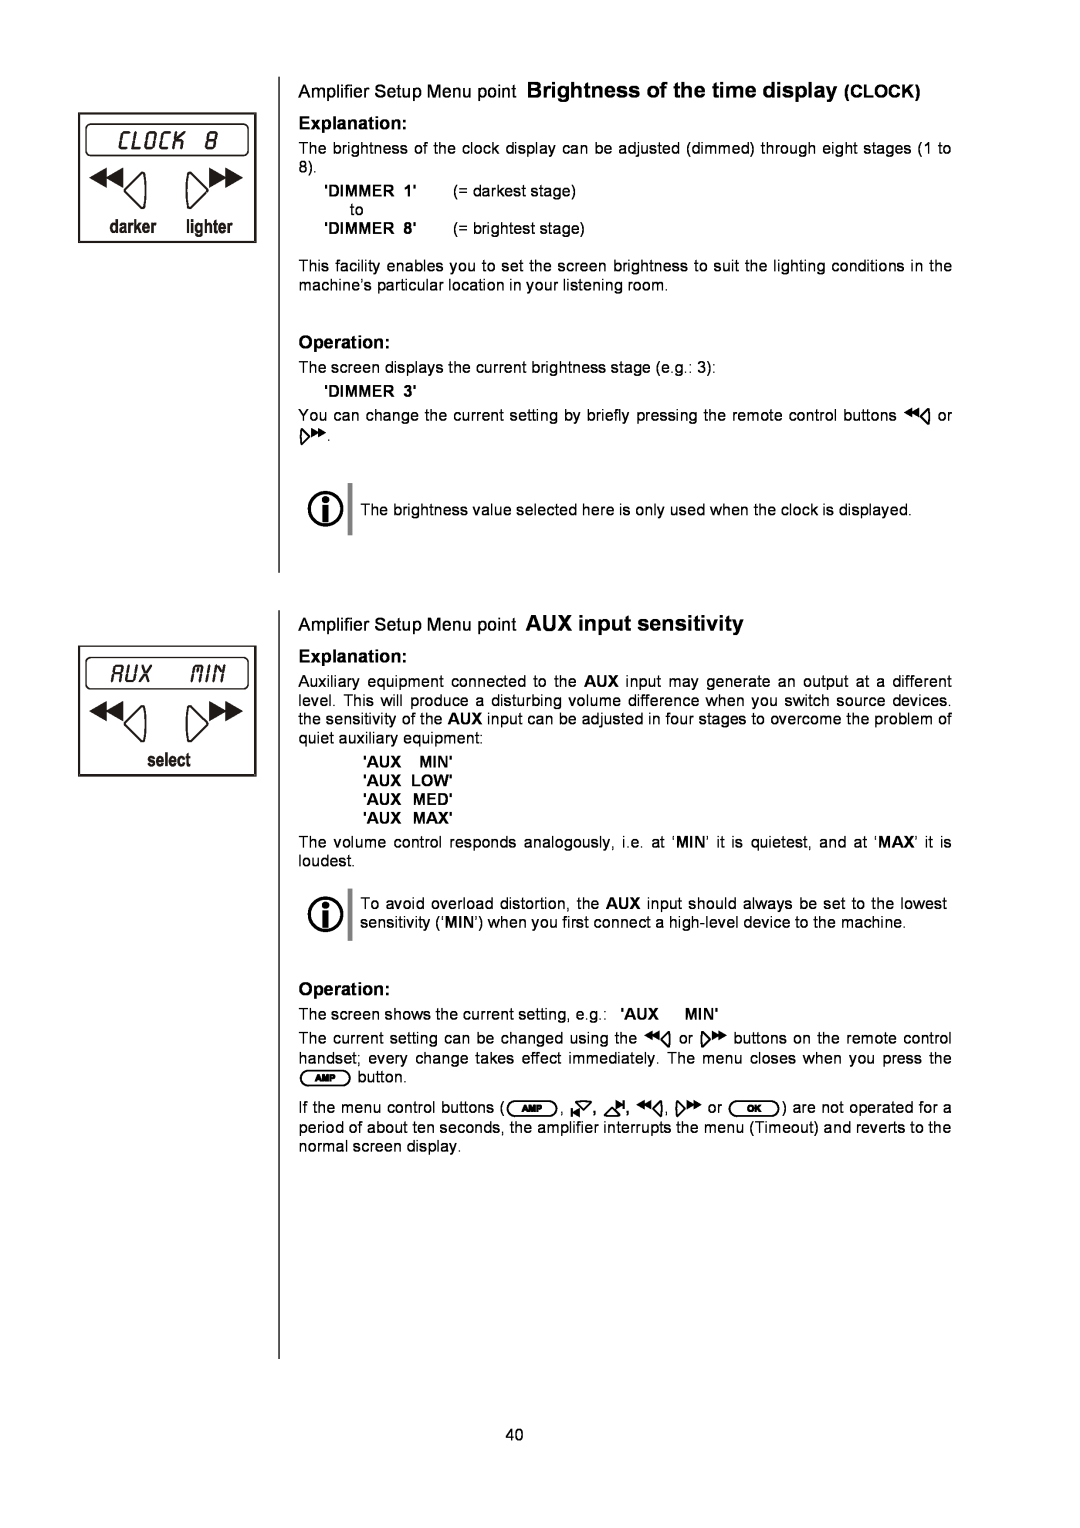 T+A Elektroakustik K1 AV user manual Aux Min, Amplifier Setup Menu point AUX input sensitivity, Explanation, Operation 